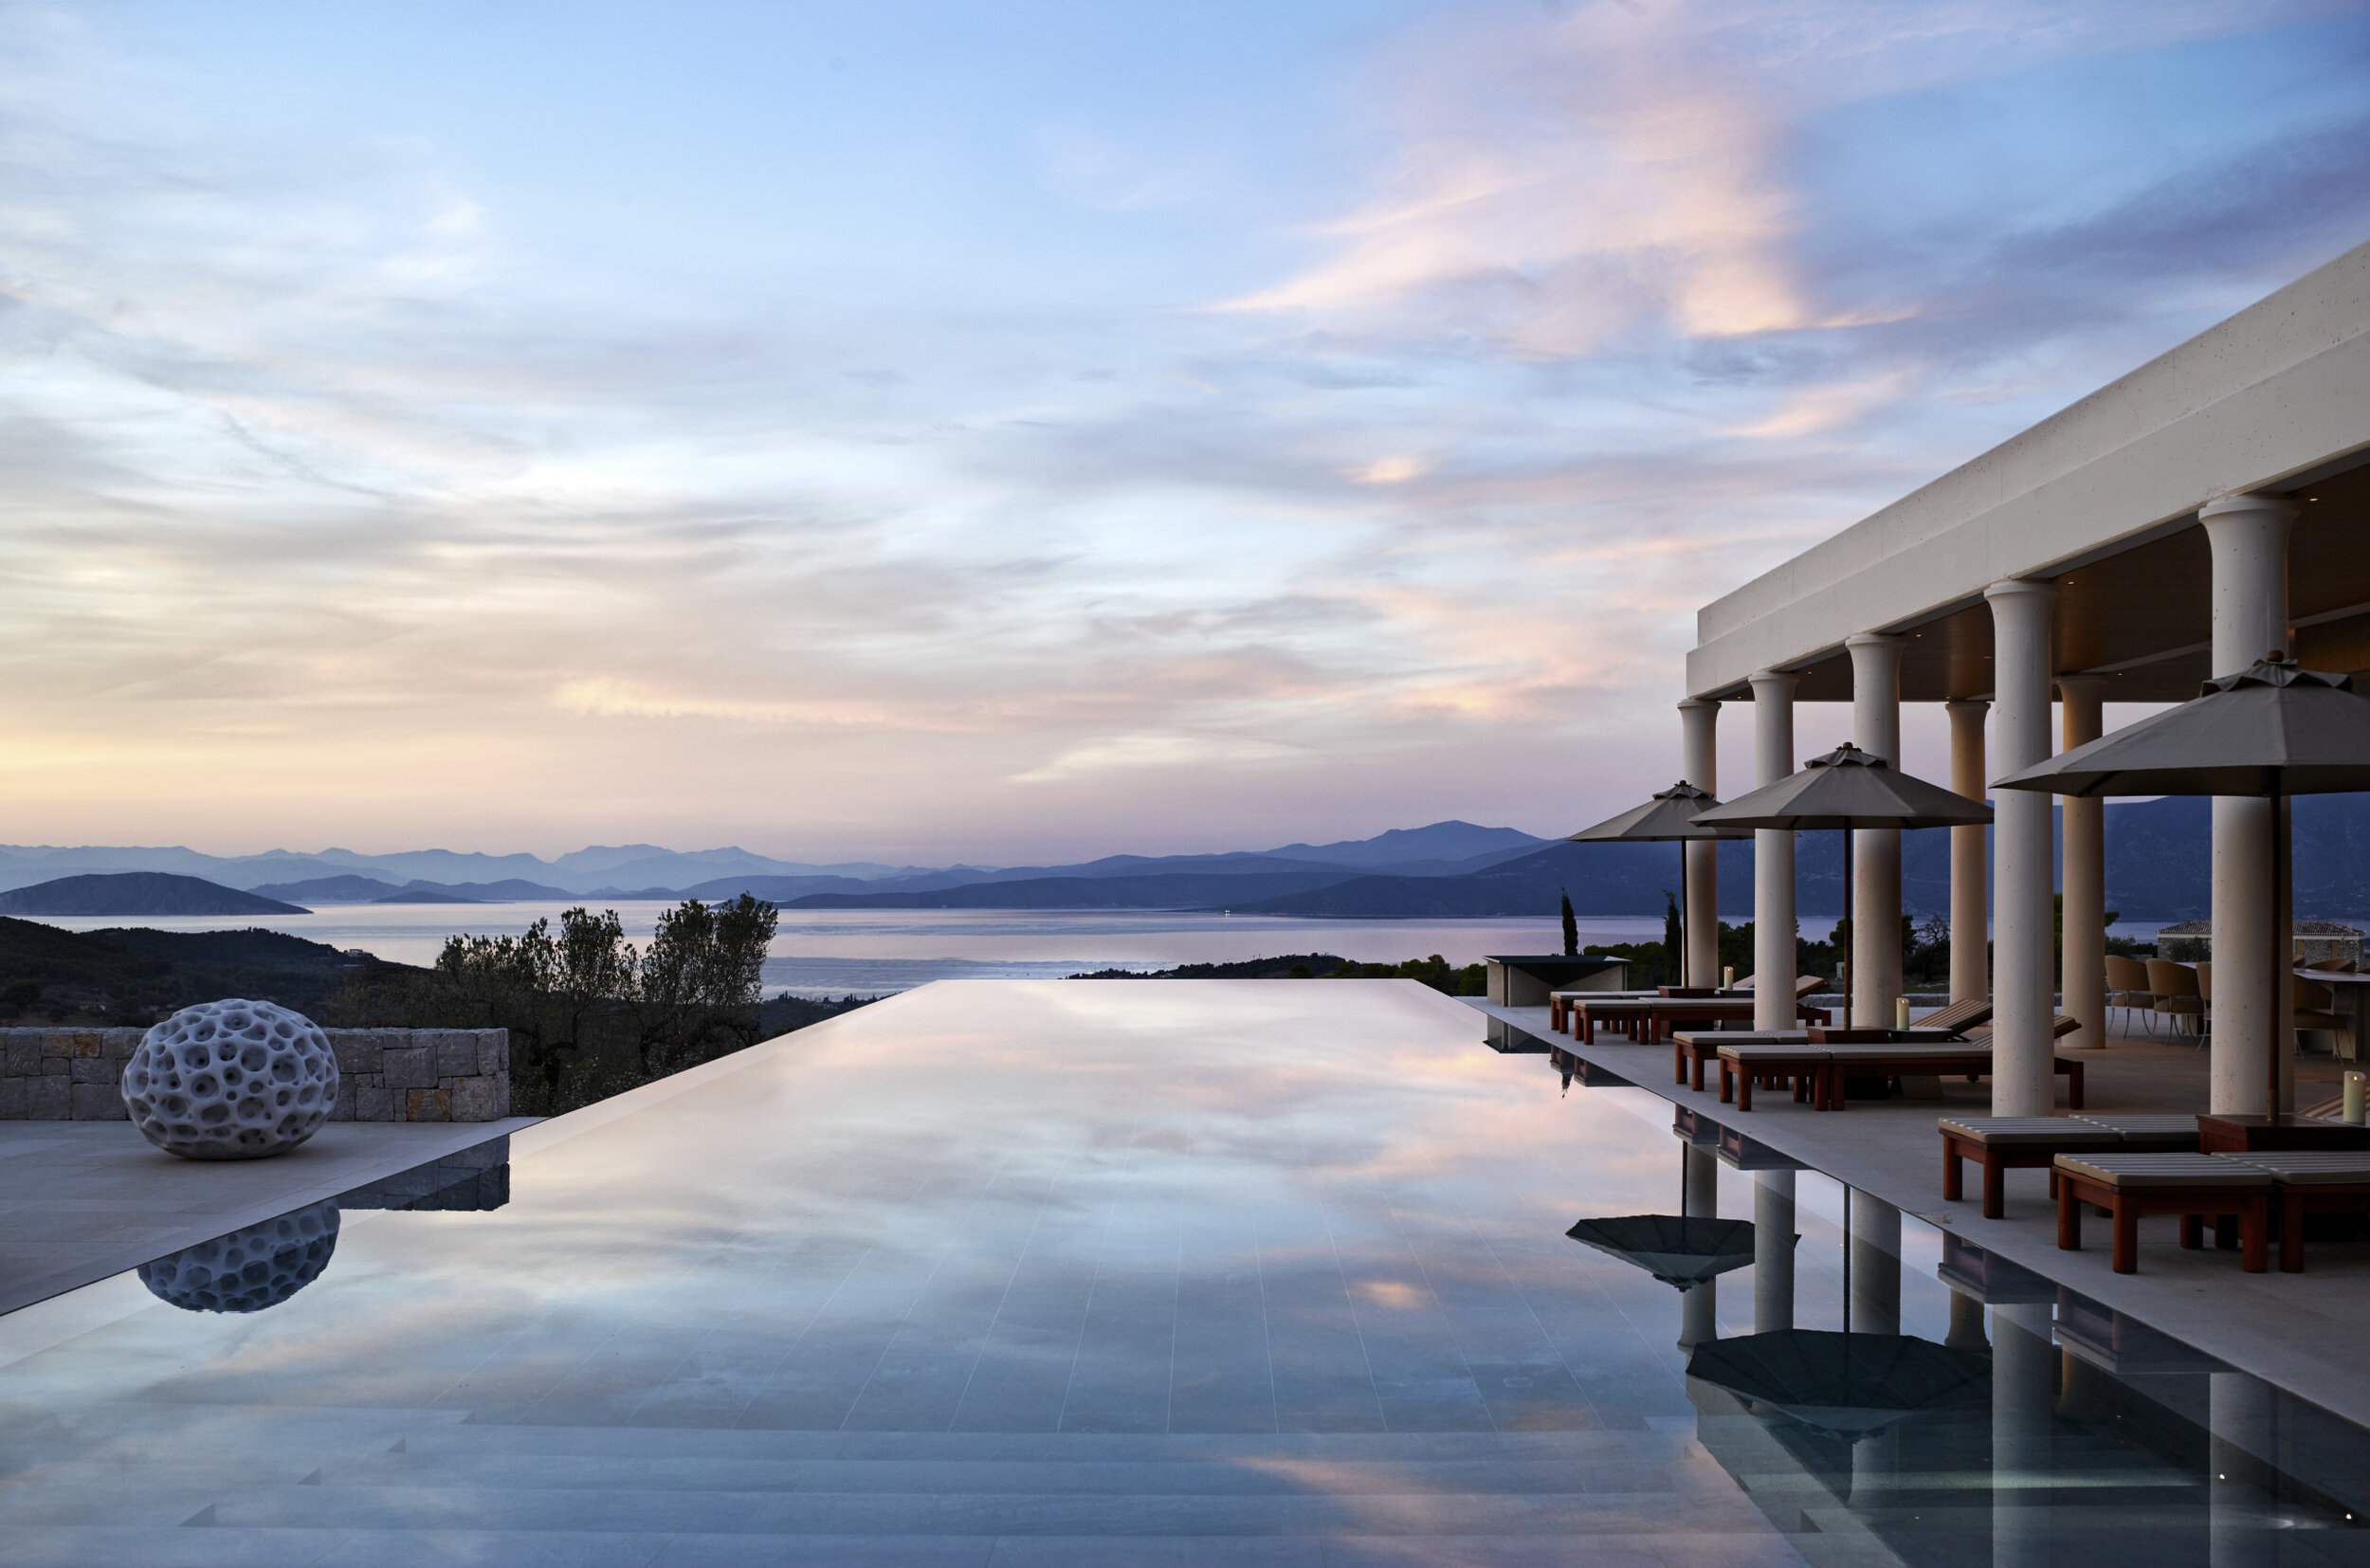 Amanzoe, Greece - Accommodation, Villas, Villa 20, Swimming pool, View, Sunset_High Res_7484.jpg